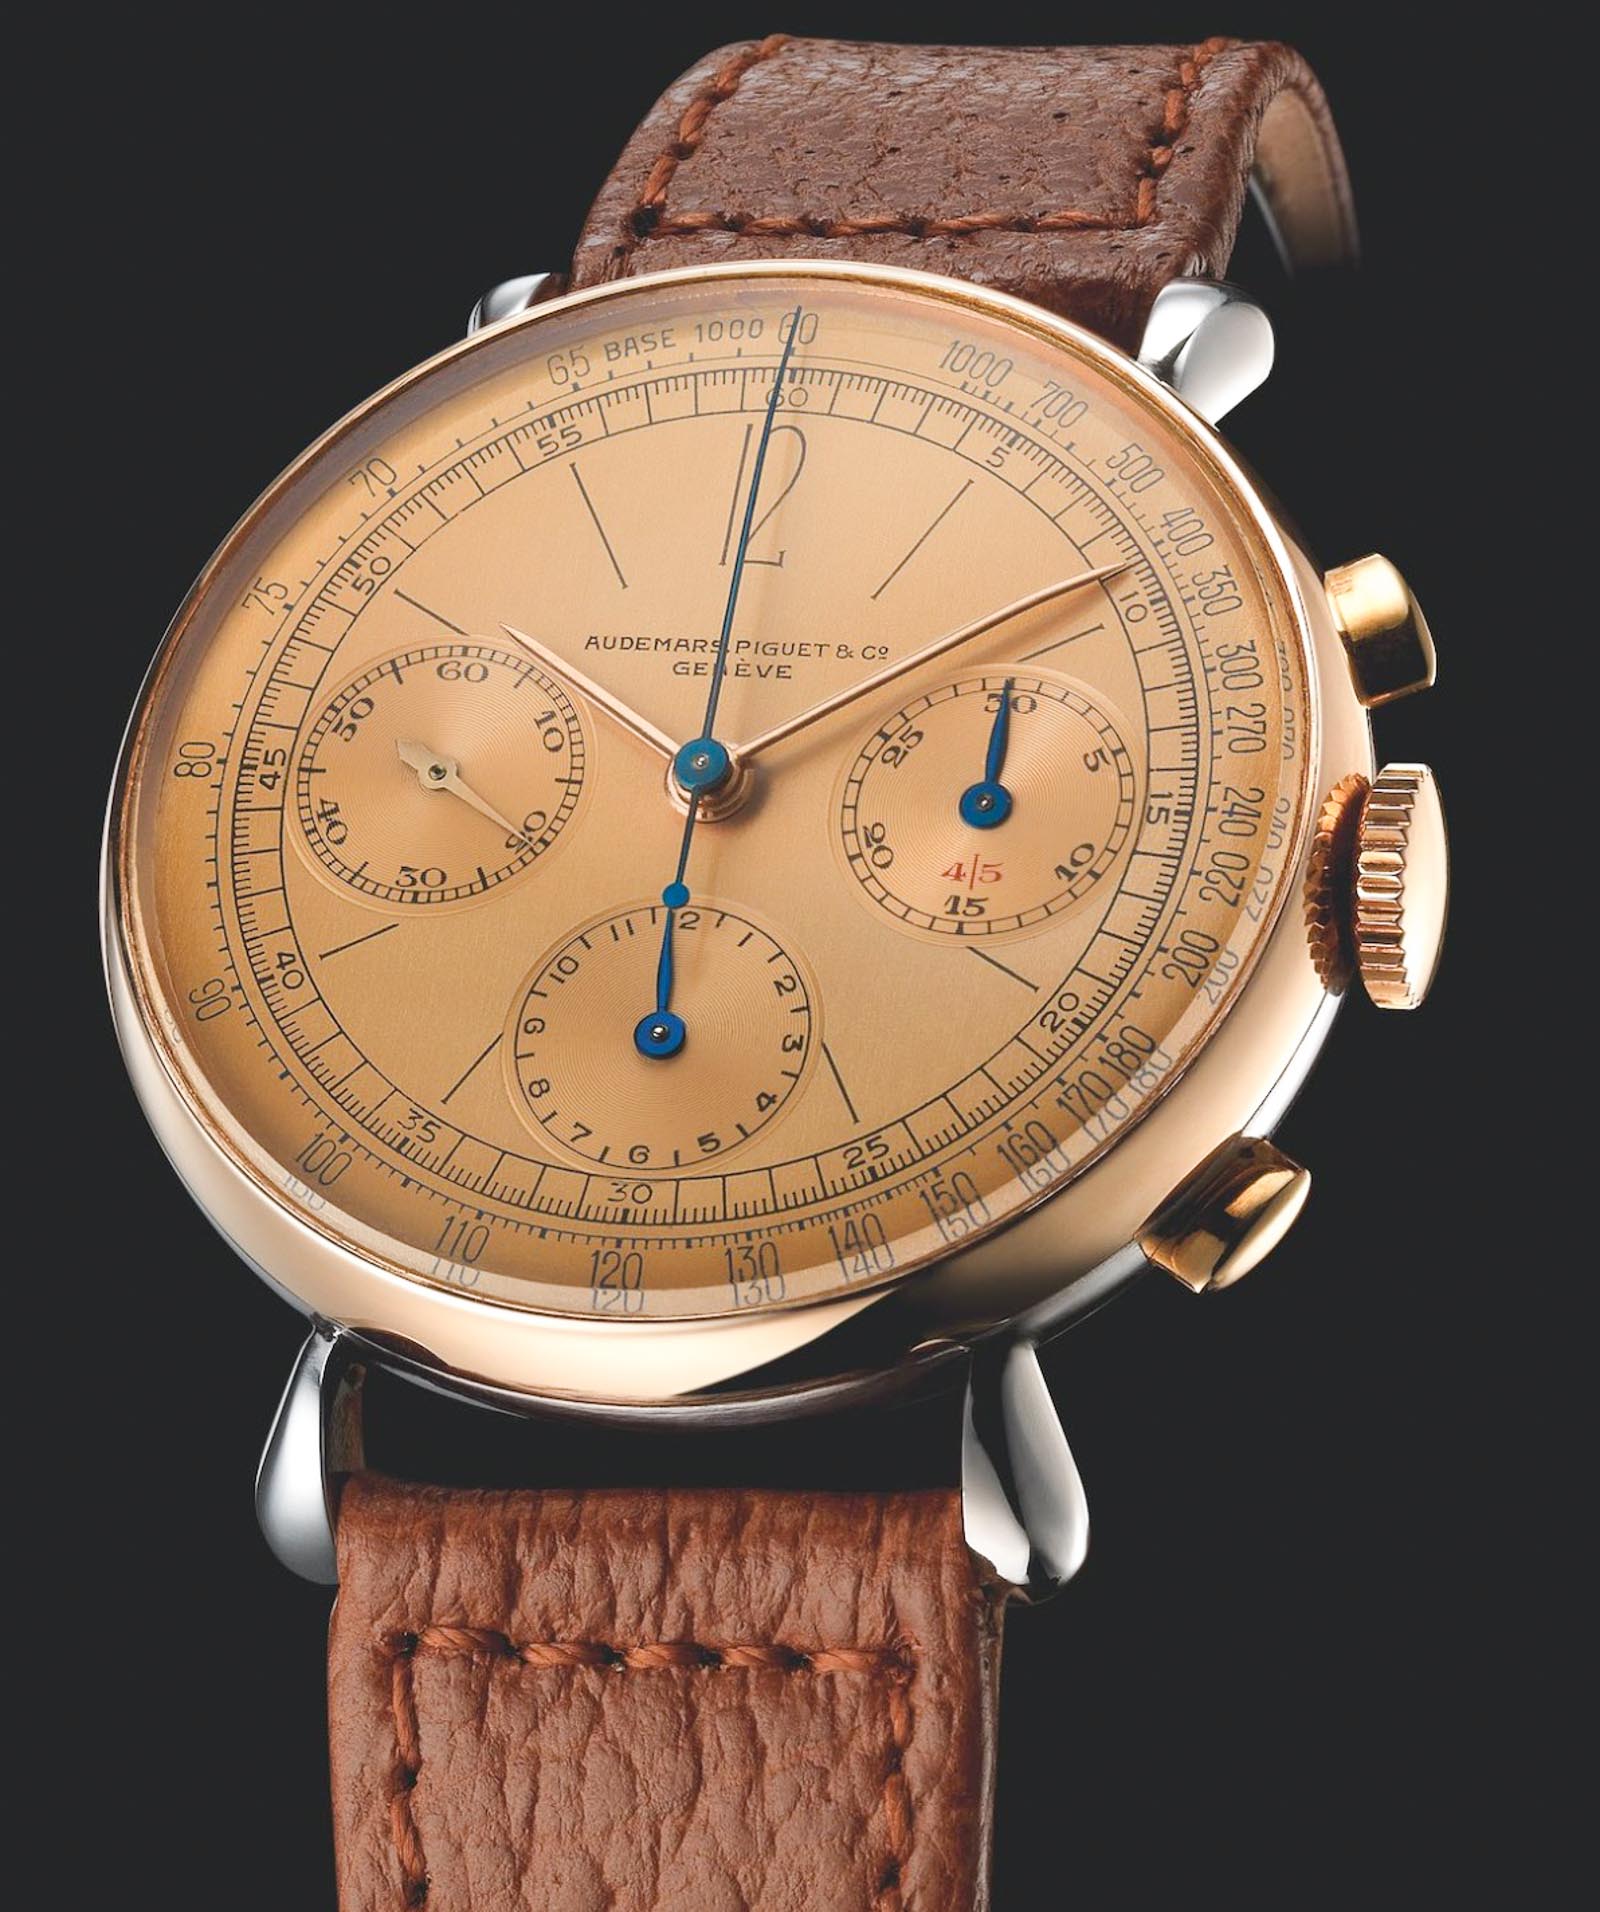 Audemars Piguet Remaster01 Self-Winding Chronograph fake Watch